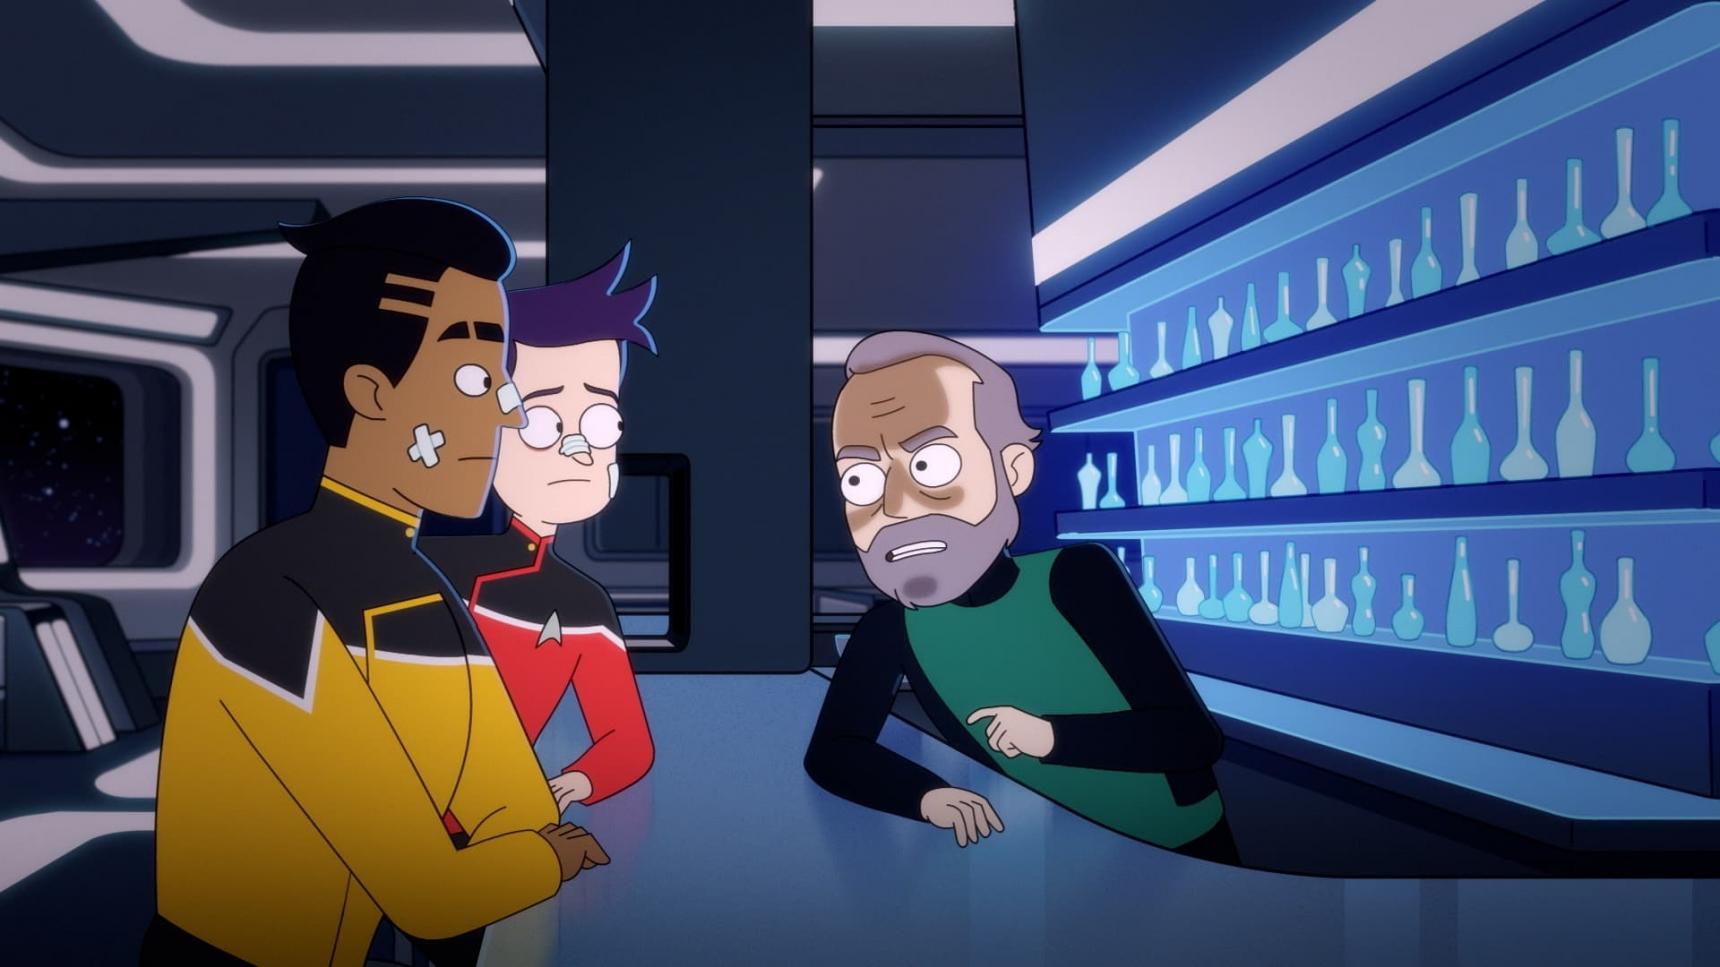 Poster del episodio 4 de Star Trek: Lower Decks online